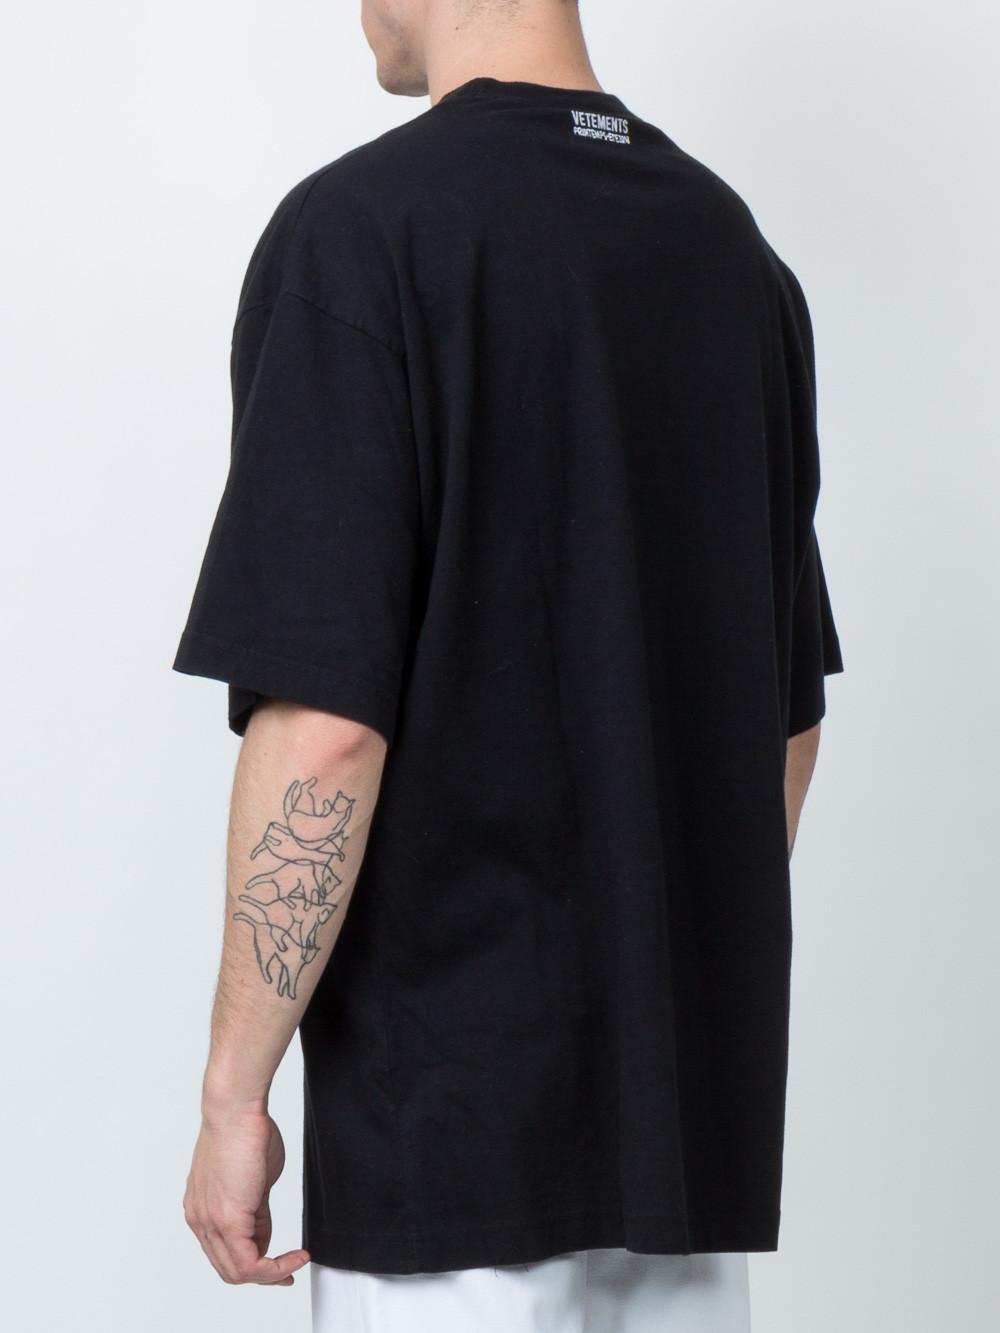 Lyst - Vetements Haute Couture Tee-shirt in Black for Men